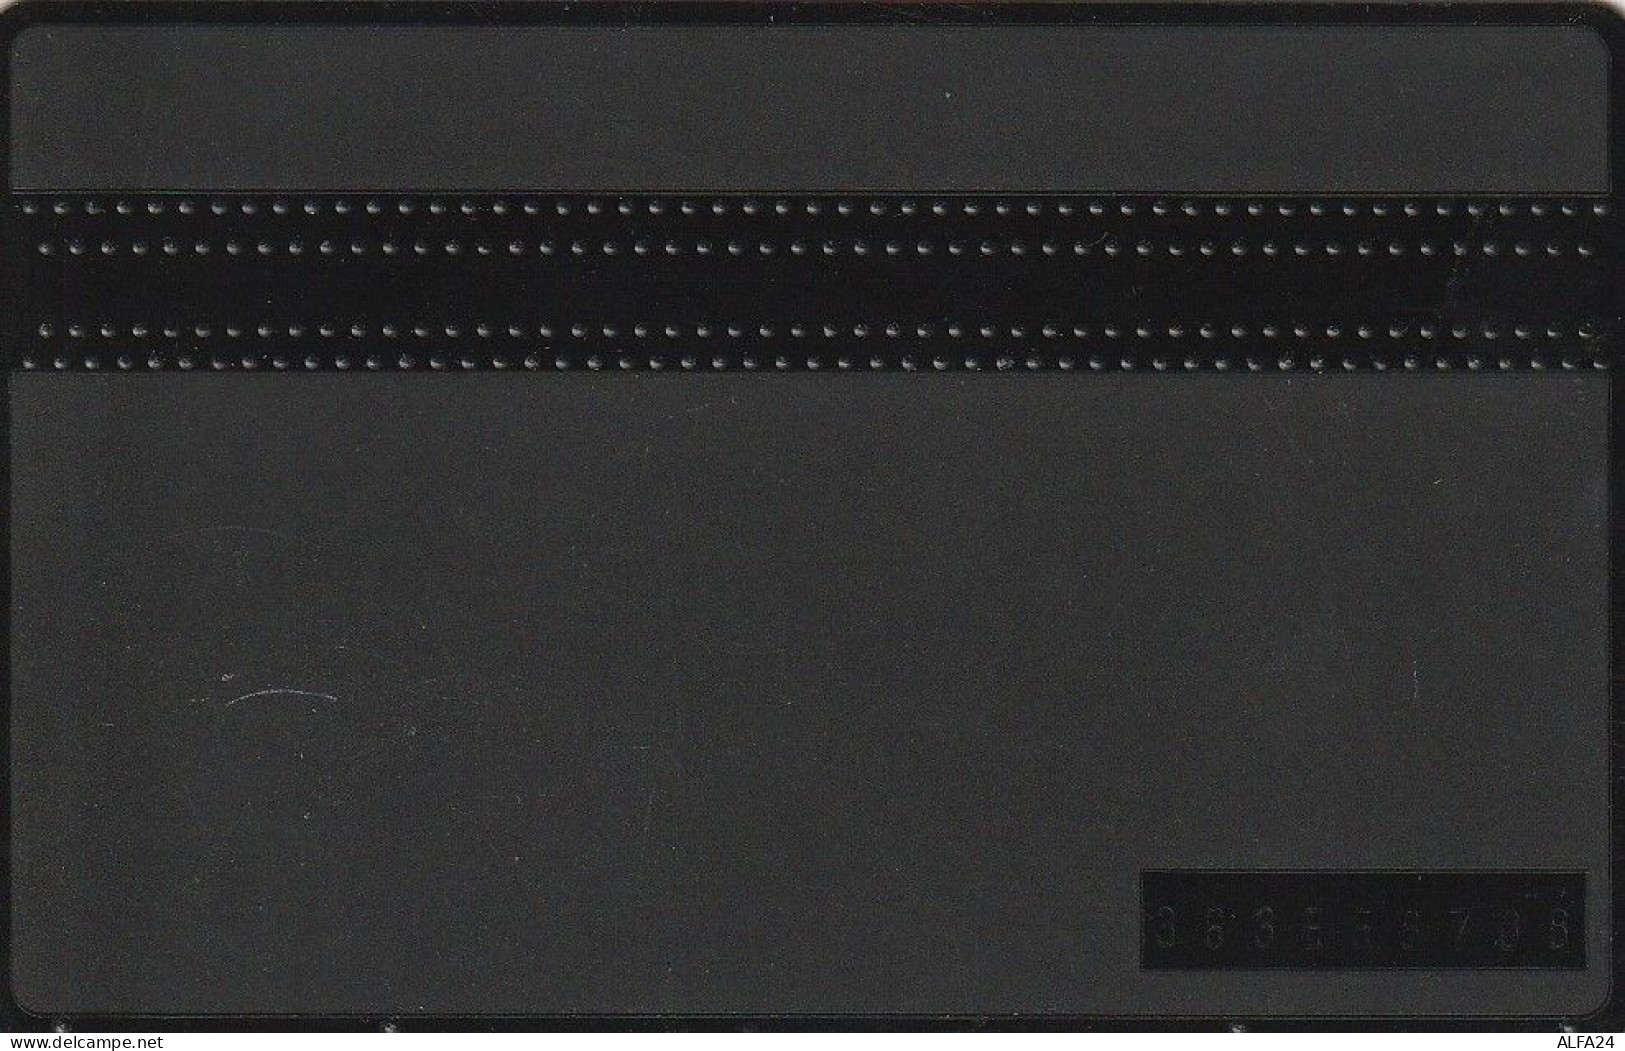 PHONE CARD BELGIO LG (CV6675 - Senza Chip